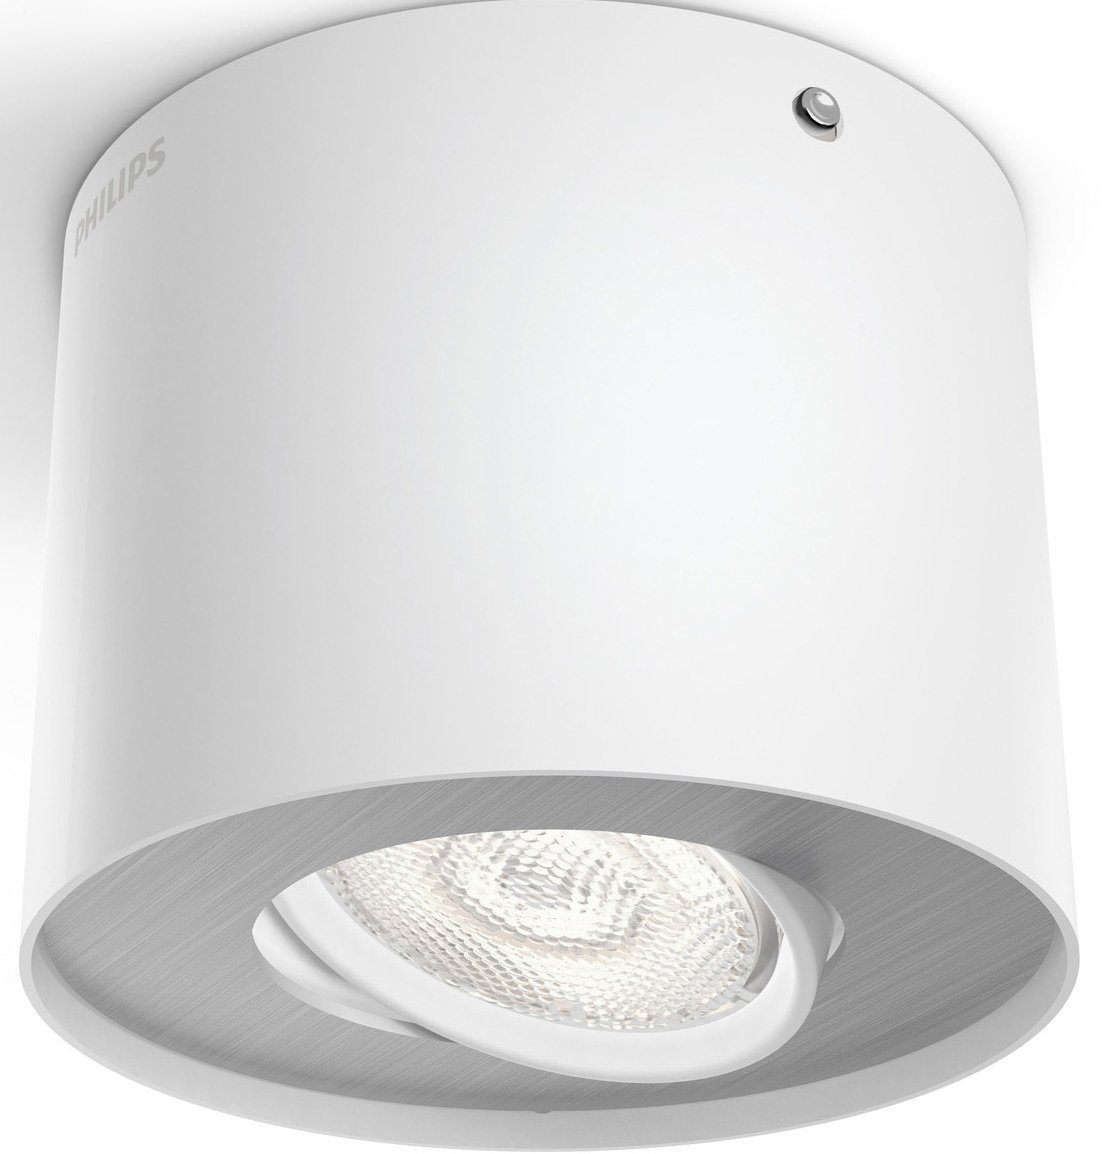 Philips Deckenspot Phase, LED fest integriert, Warmweiß, myLiving LED Spot  1flg. 500lm Weiß | Deckenstrahler